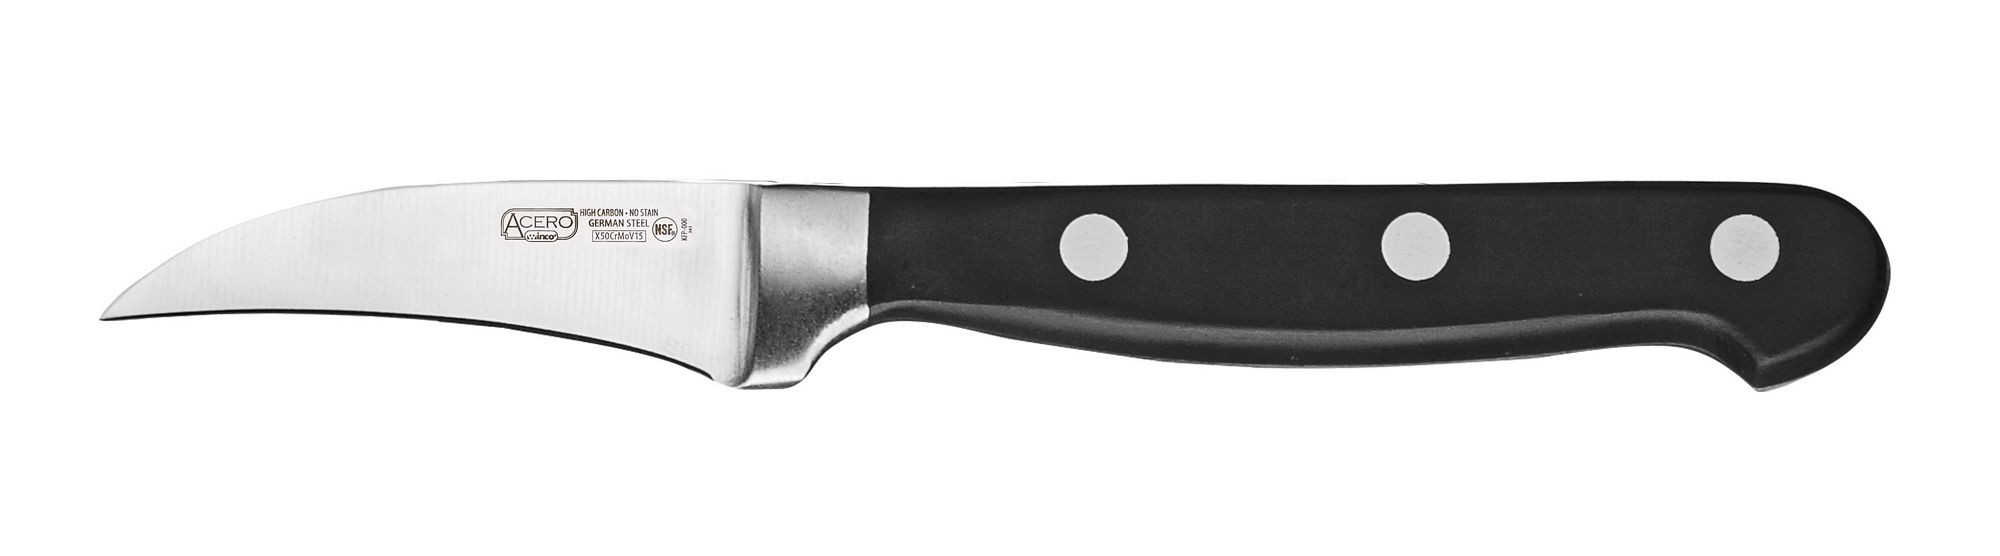 Winco KFP-30 Acero 2-3/4" Peeling Knife